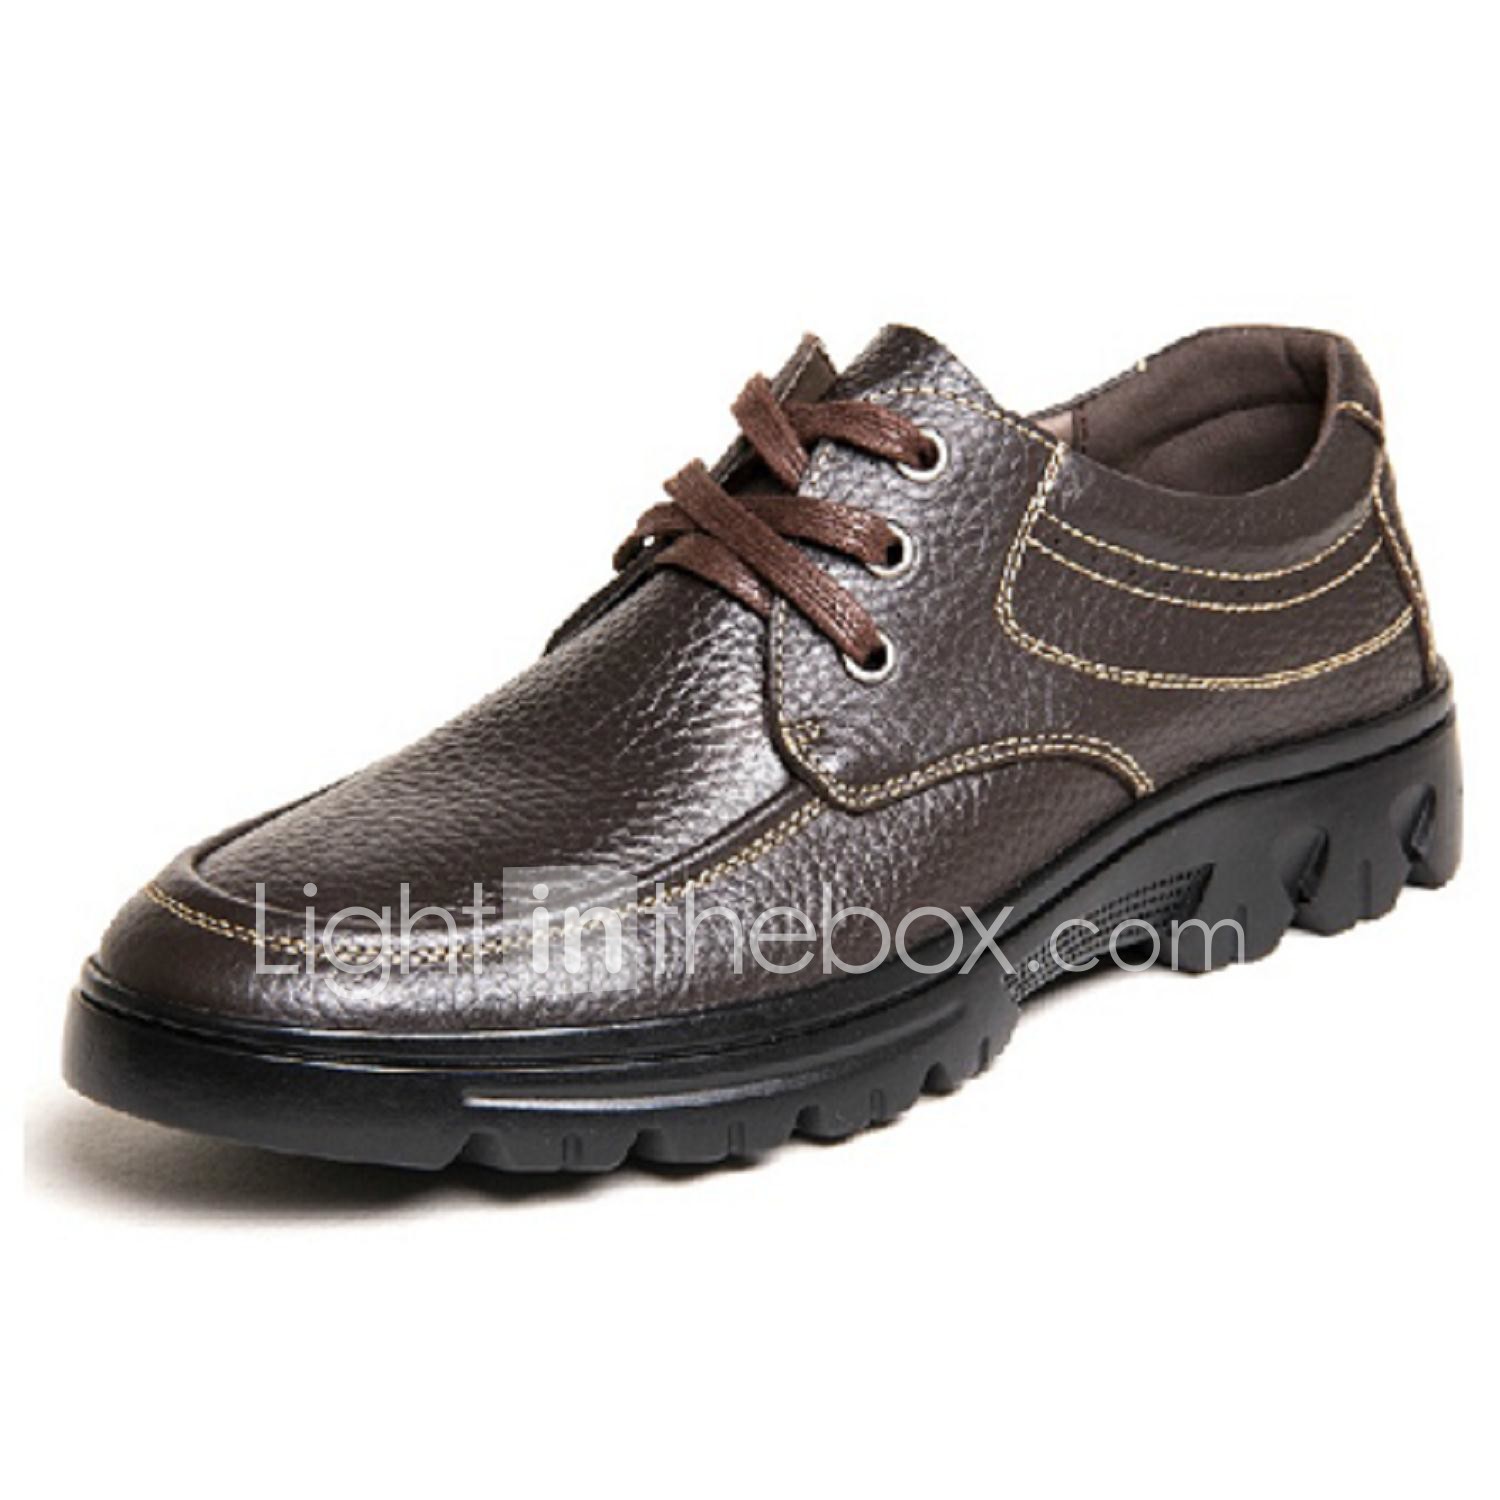 lightinthebox men's shoes